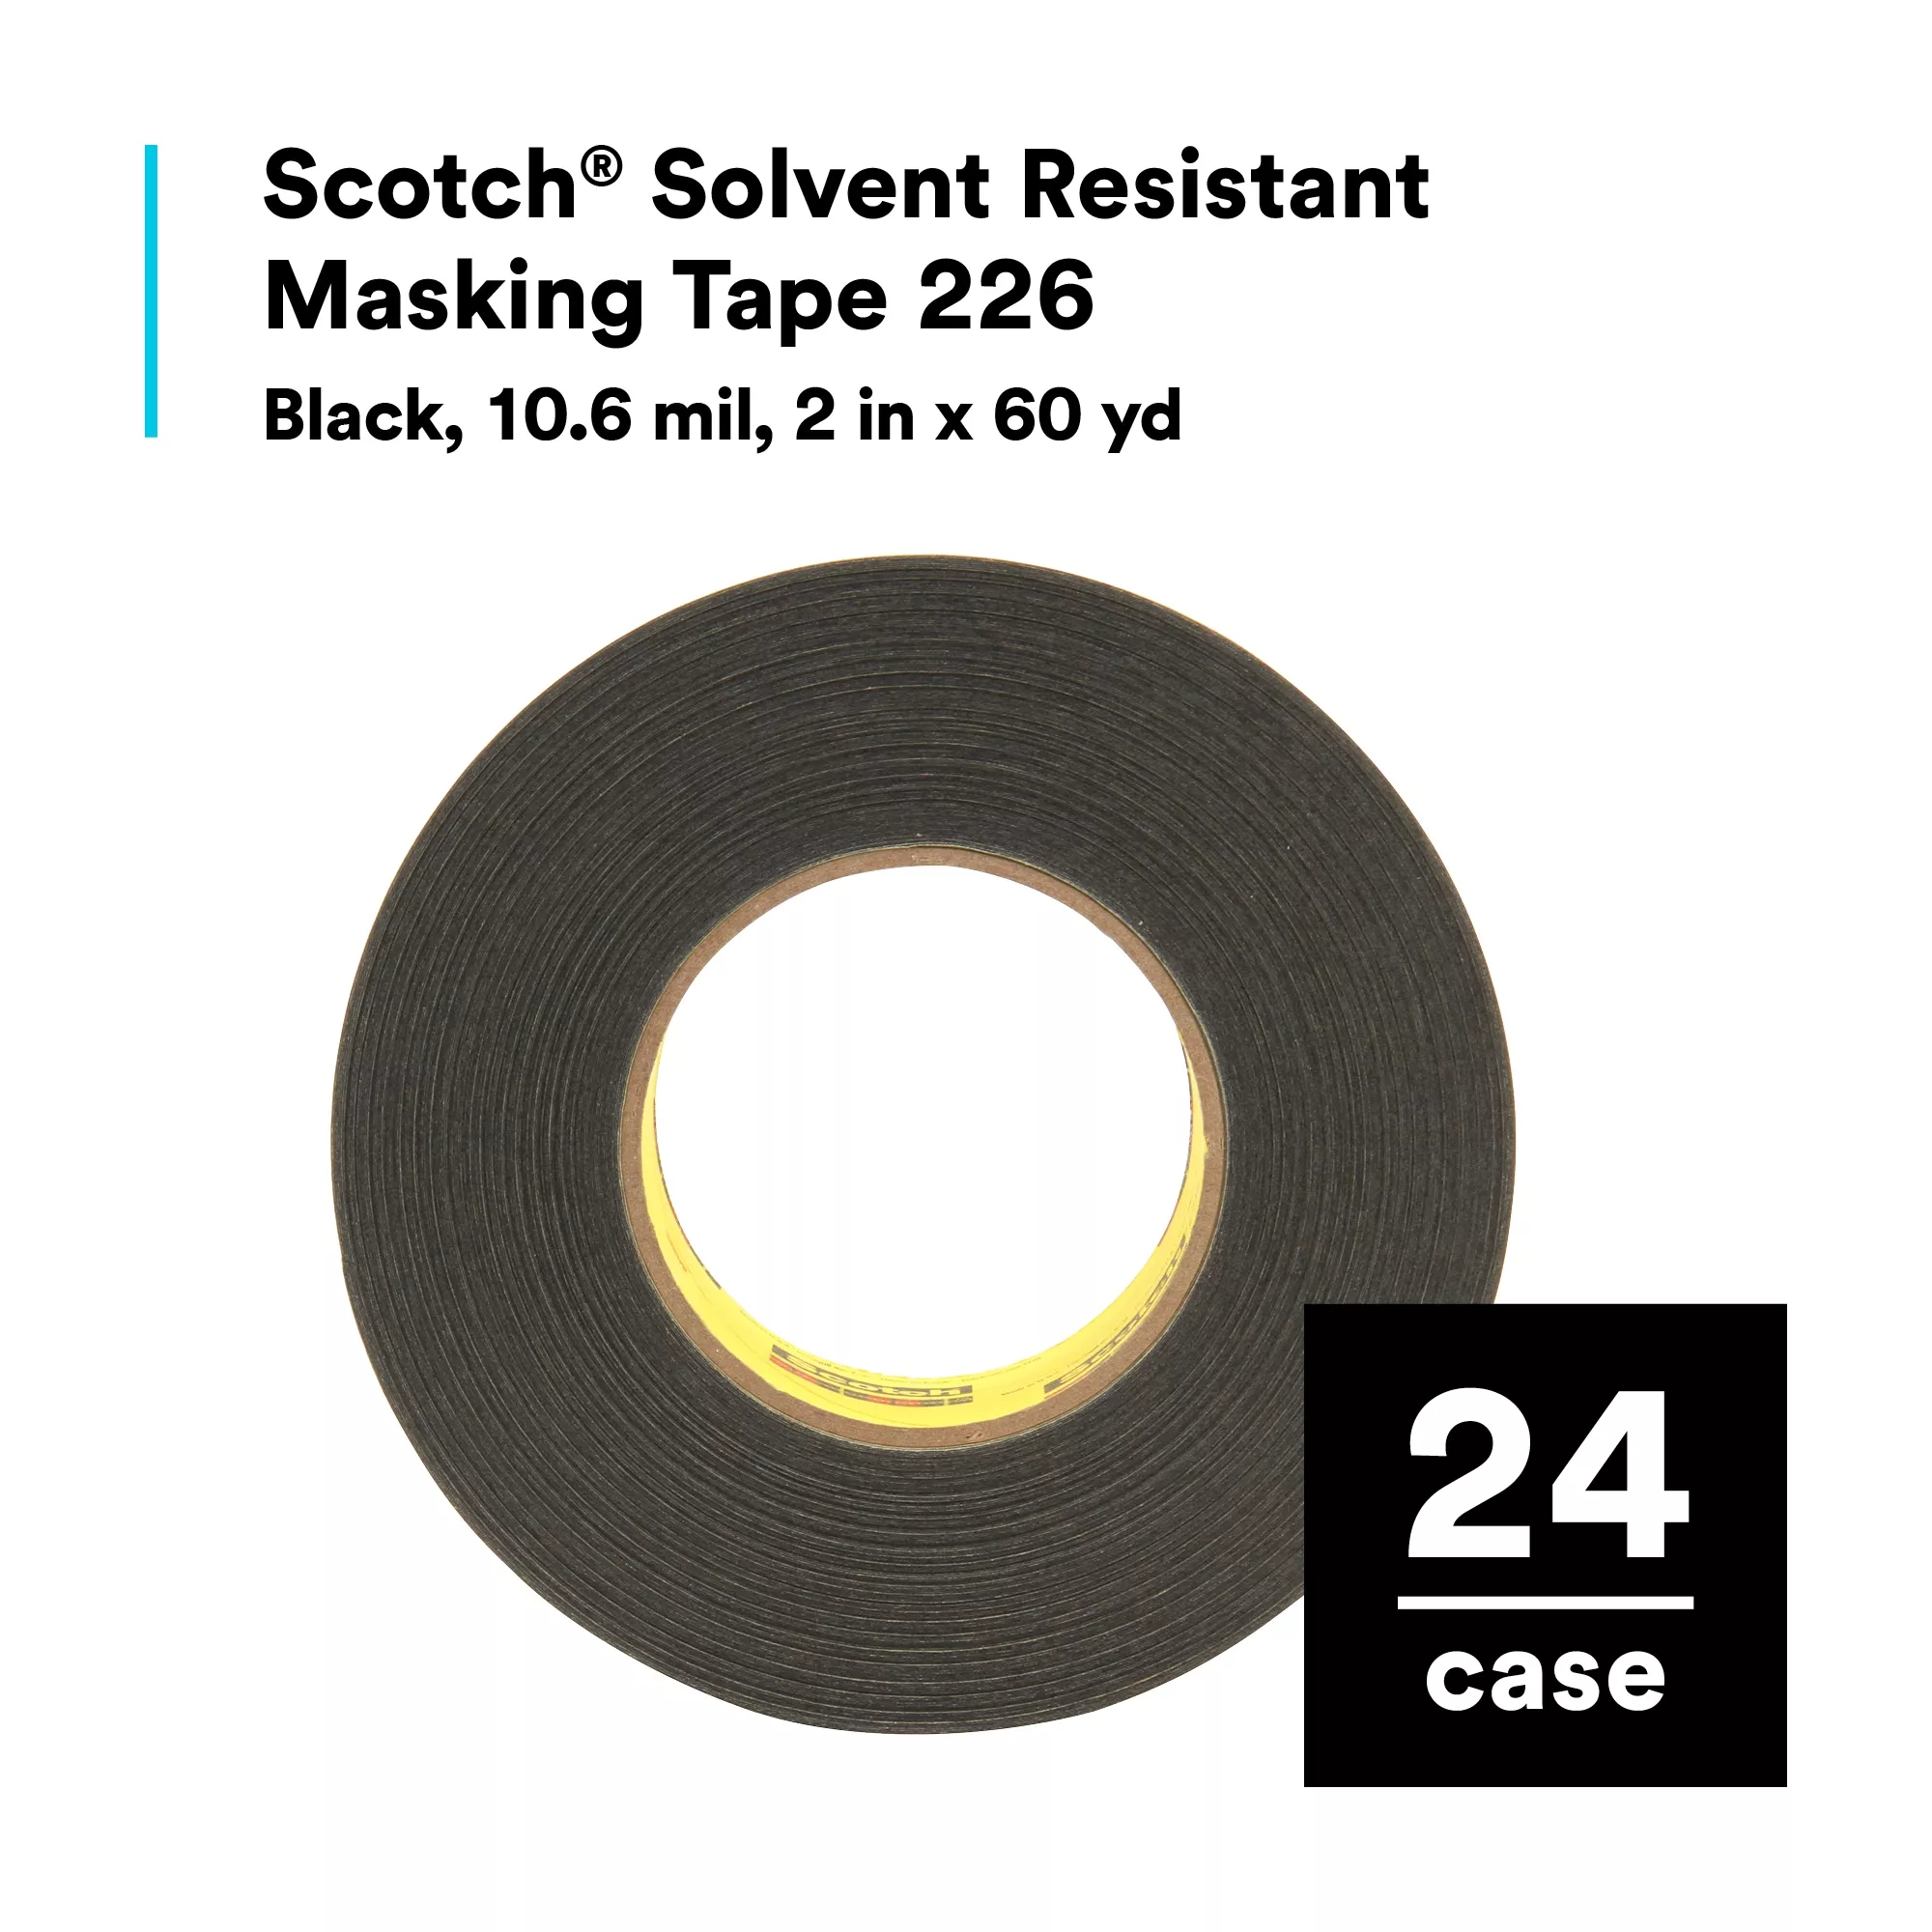 SKU 7000048633 | Scotch® Solvent Resistant Masking Tape 226